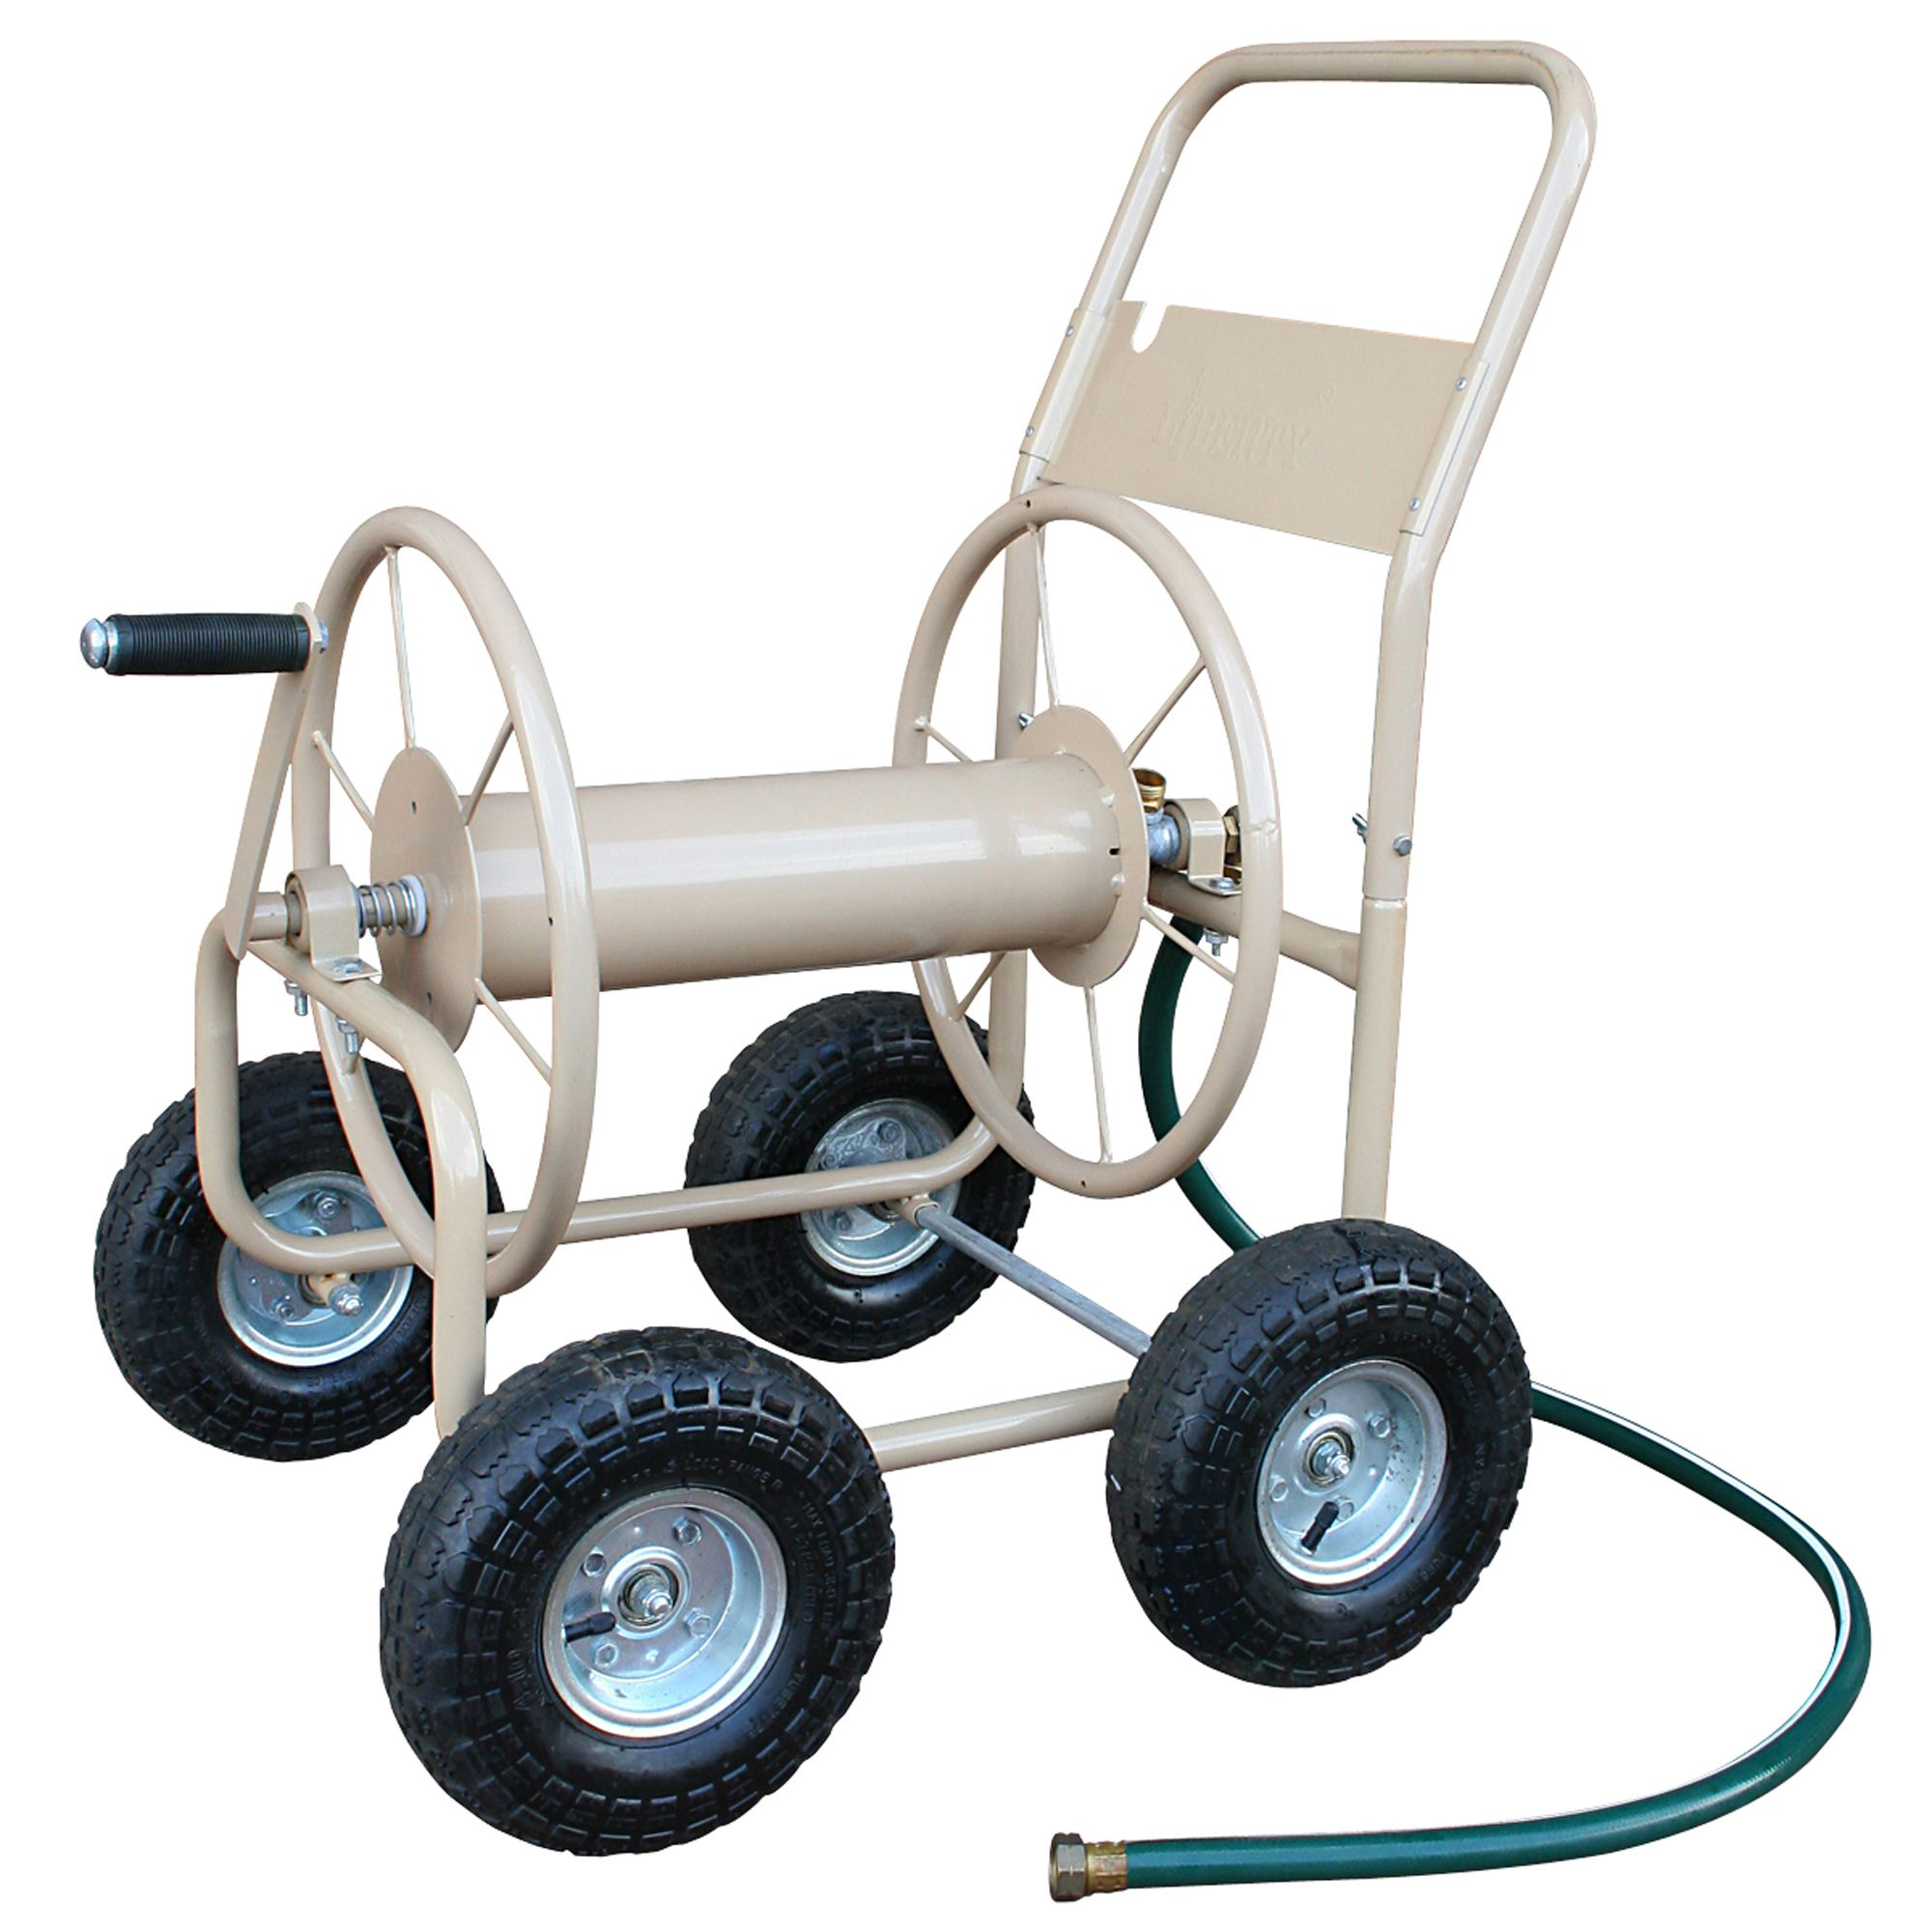 Liberty 870-M1-2 4-Wheel Industrial Hose Reel Cart